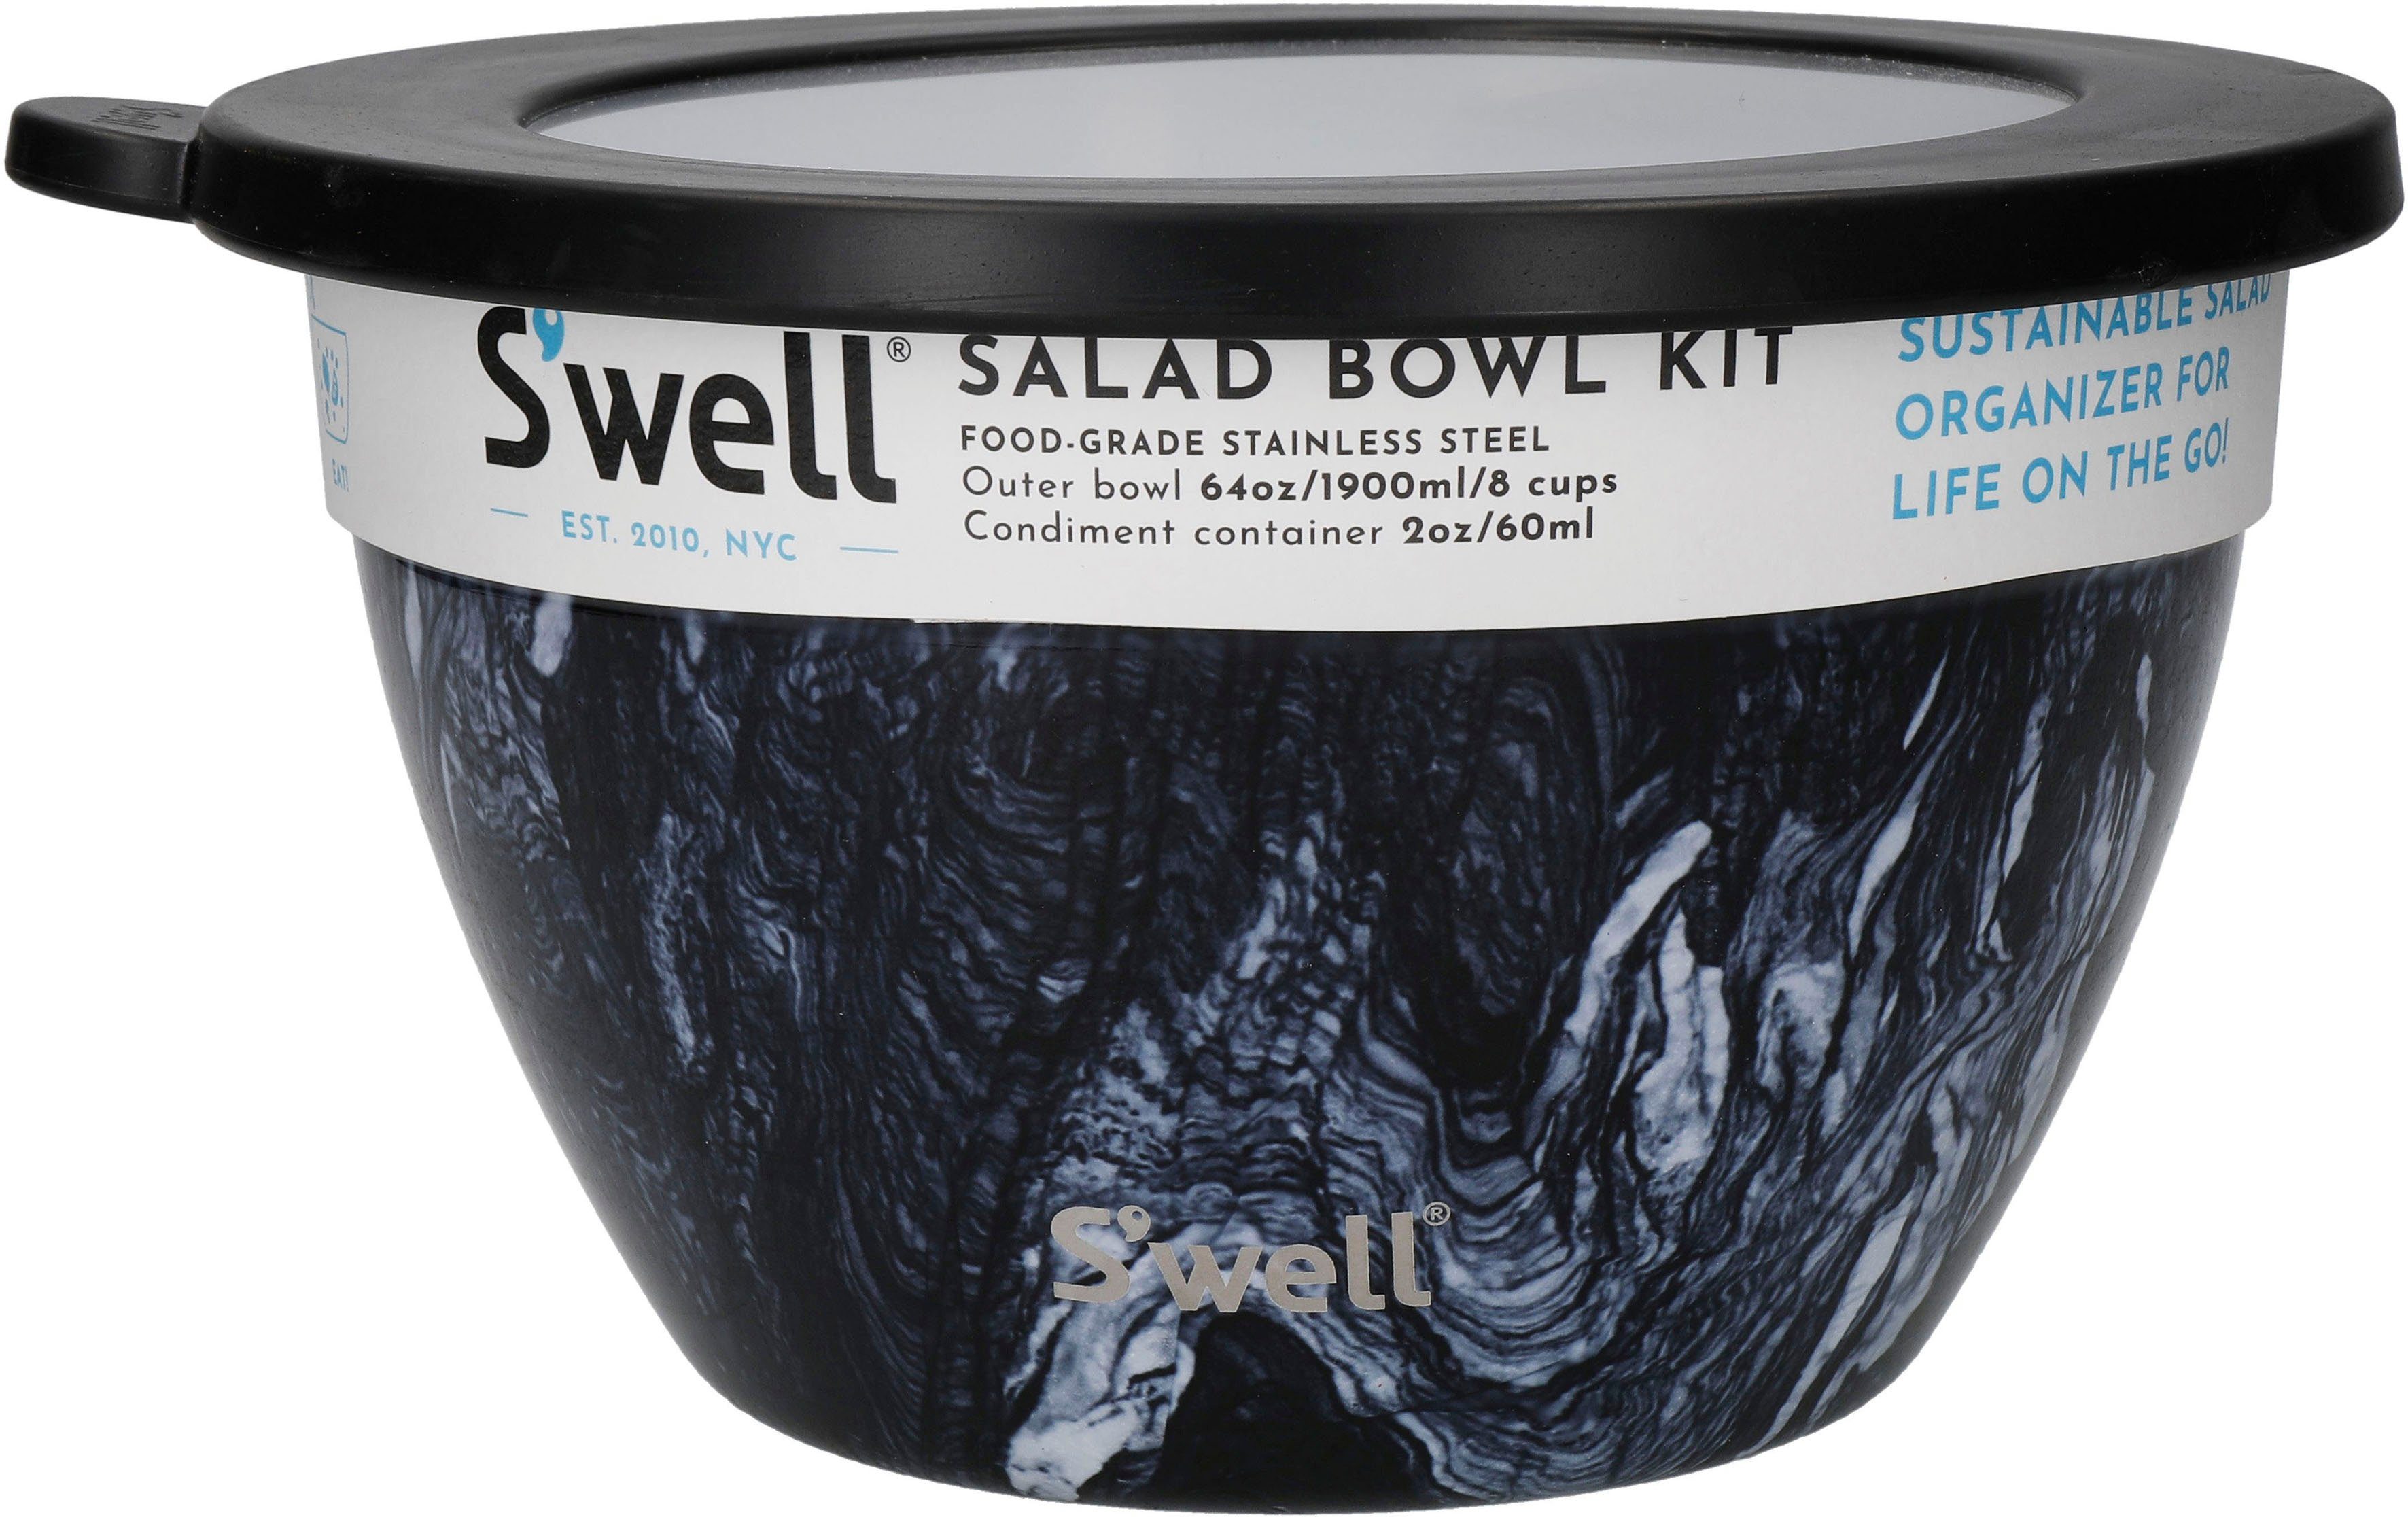 S'well Salatschüssel S'well Edelstahl, (3-tlg), Salad Bowl vakuumisolierten Onyx Azurit-Marmor Therma-S'well®-Technologie, 1.9L, Außenschale Kit